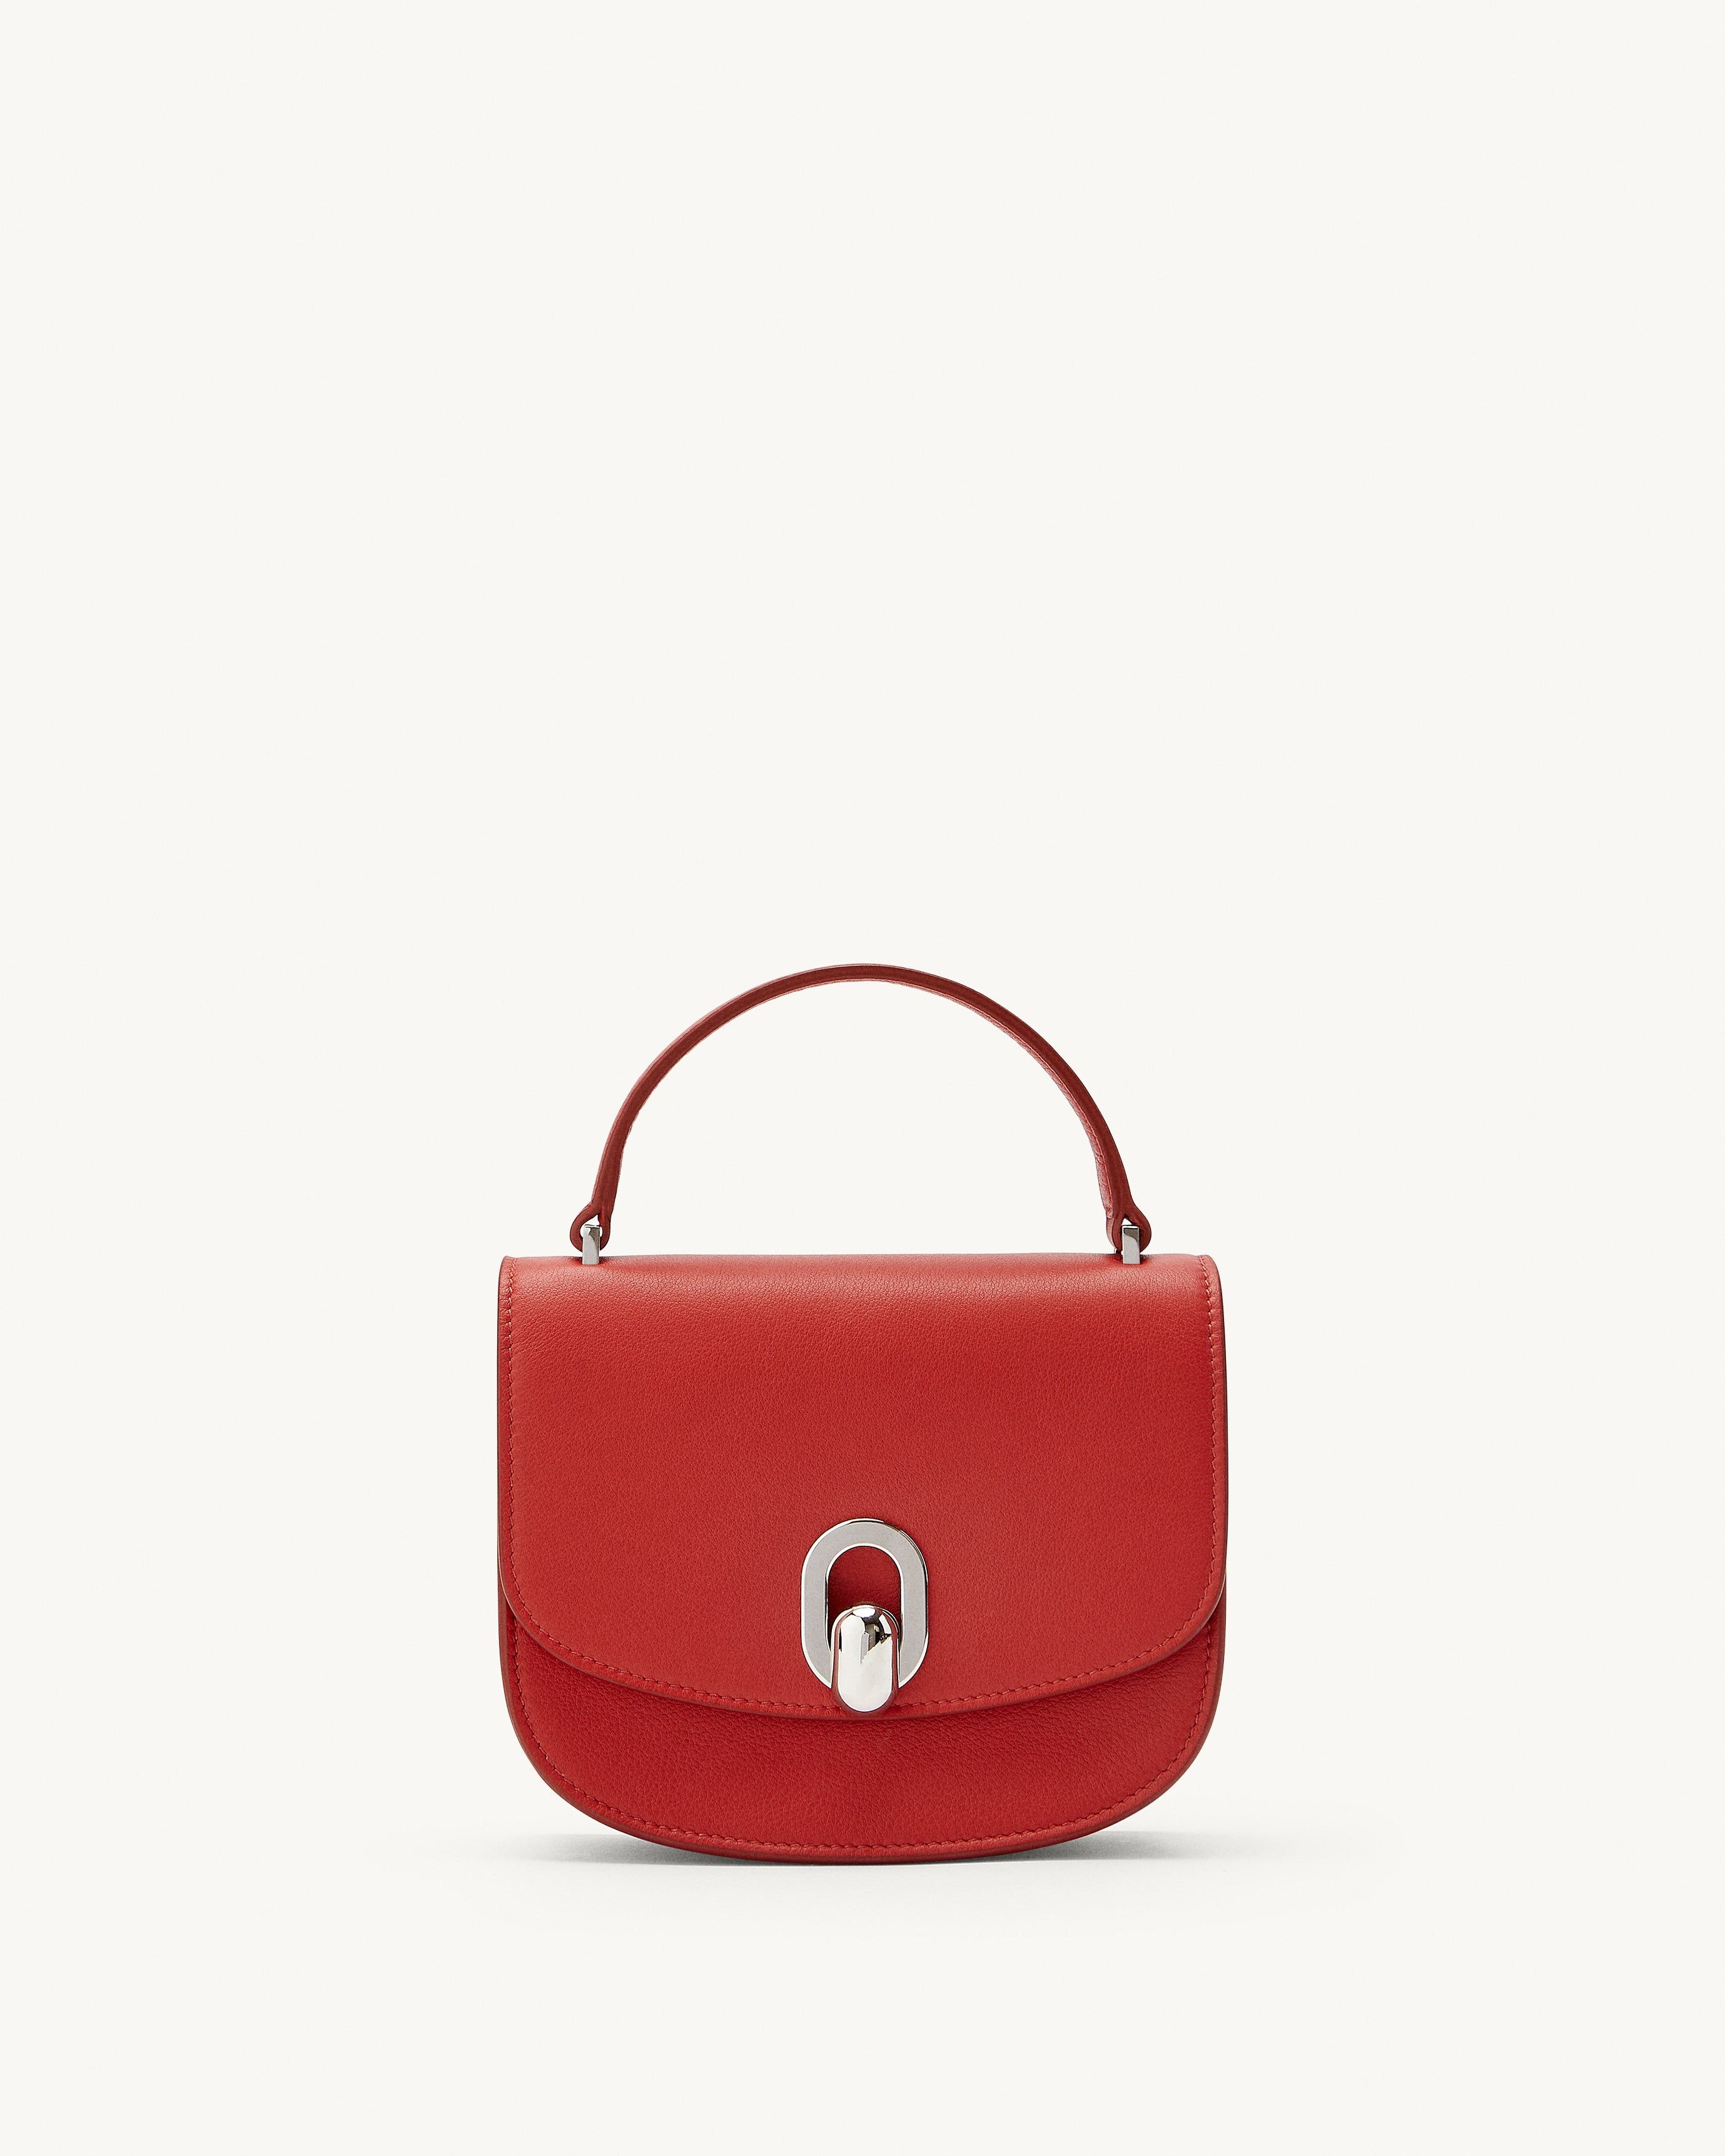 Baggizmo - the Innovative textile Cardinal Red bag